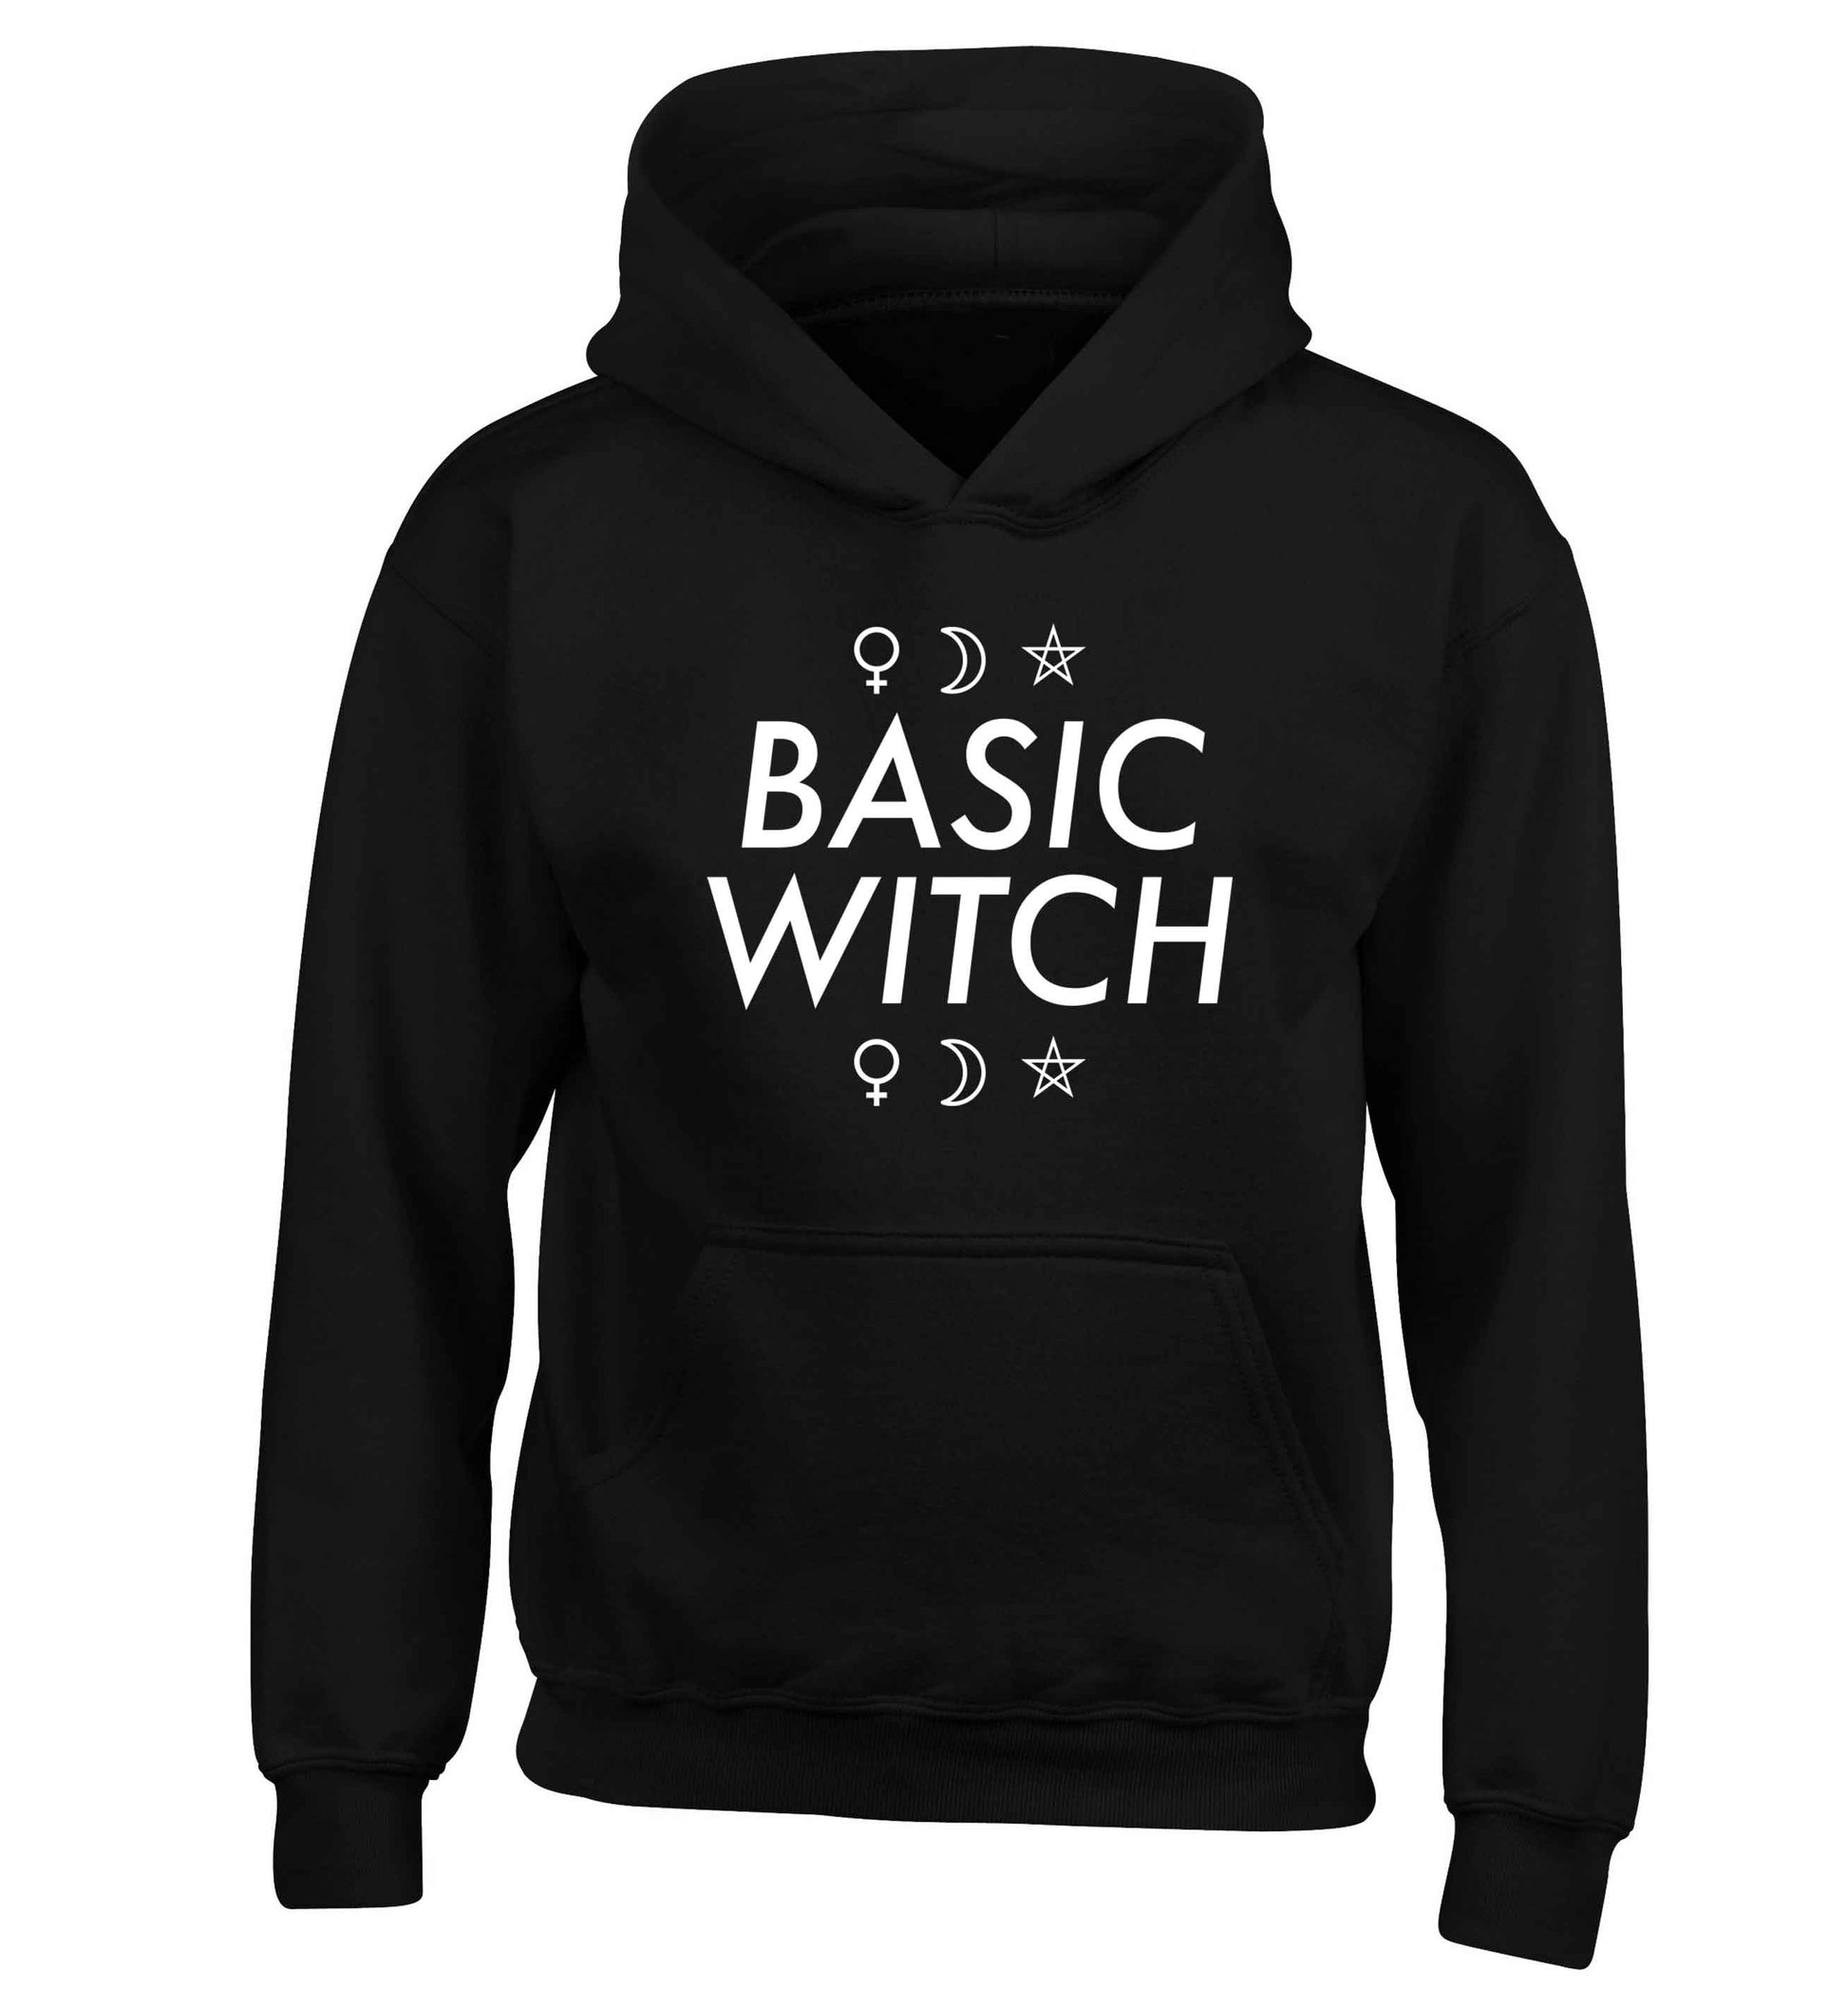 Basic witch 1 children's black hoodie 12-13 Years